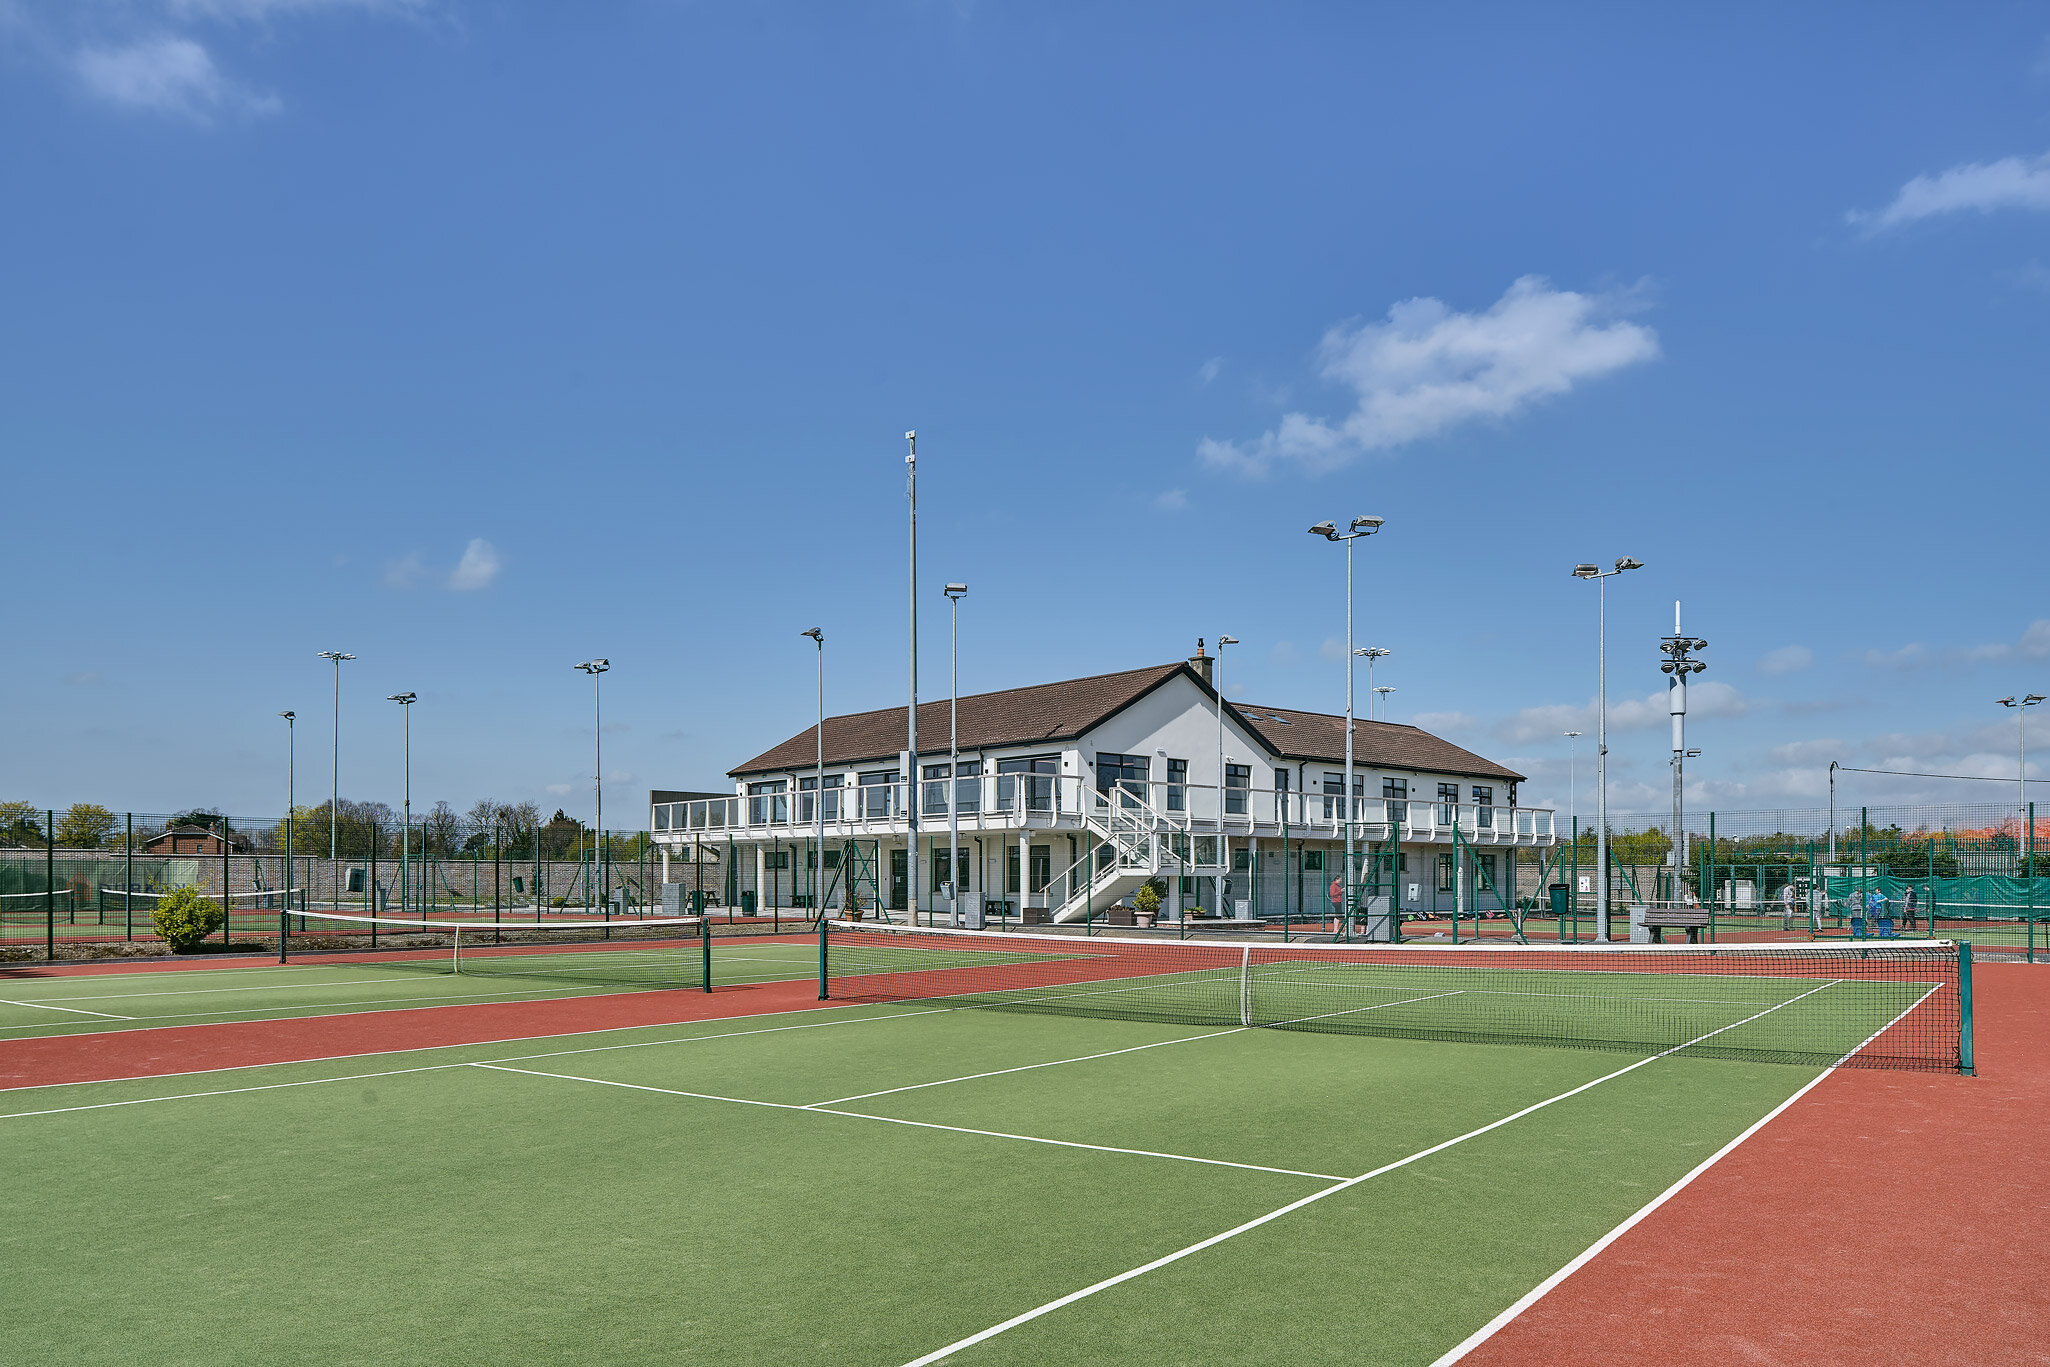 Castleknock-Tennis-Club_DSC5343.jpg